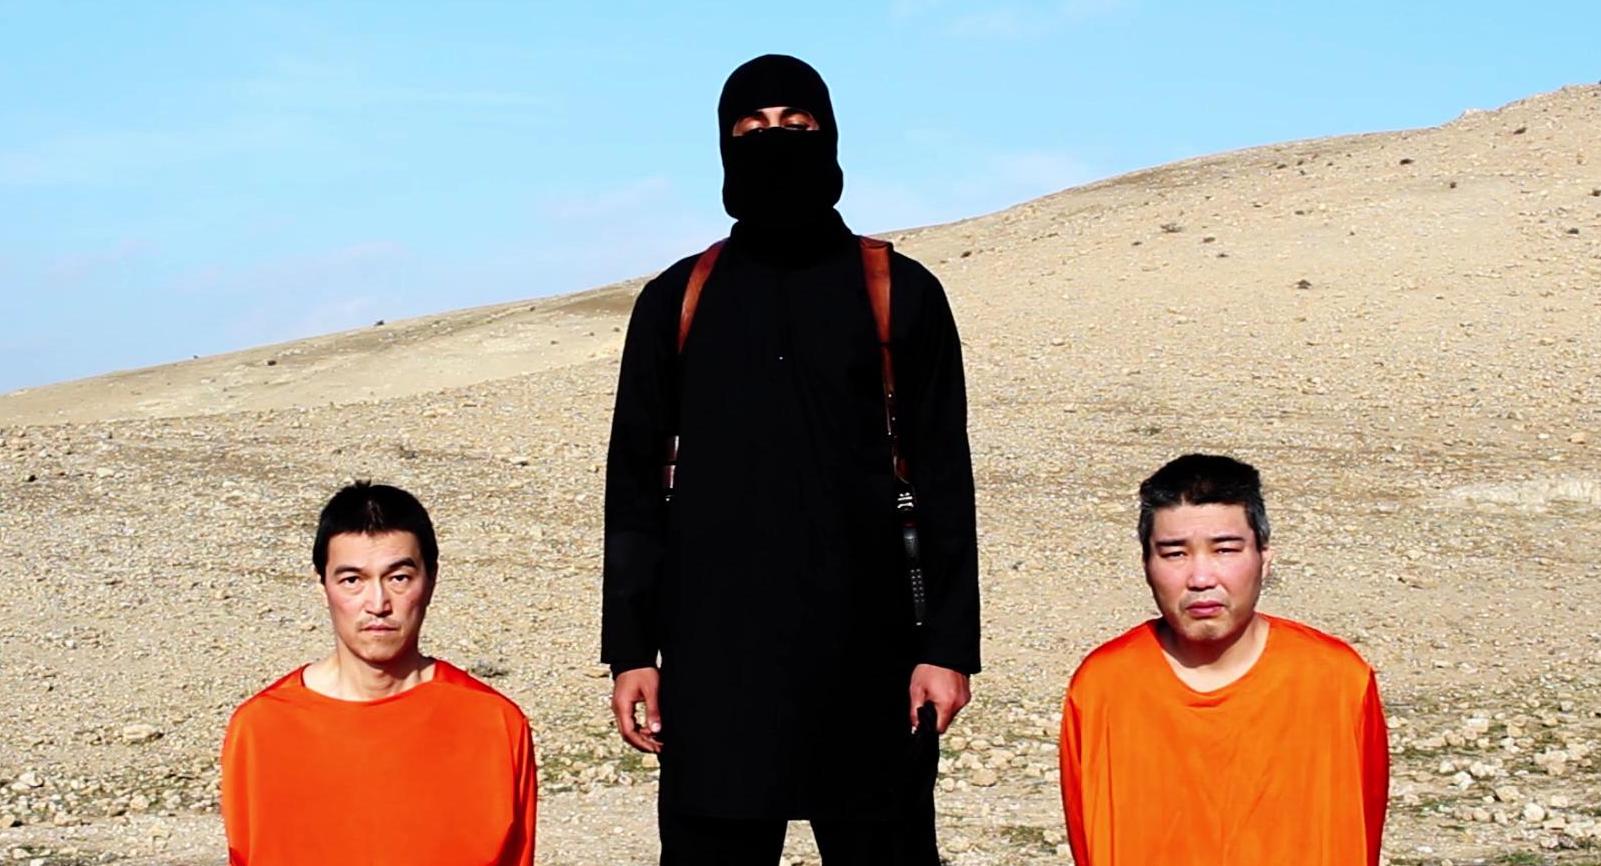 داعش يهدد باعدام رهينتين يابانيين وطوكيو ترفض الرضوخ